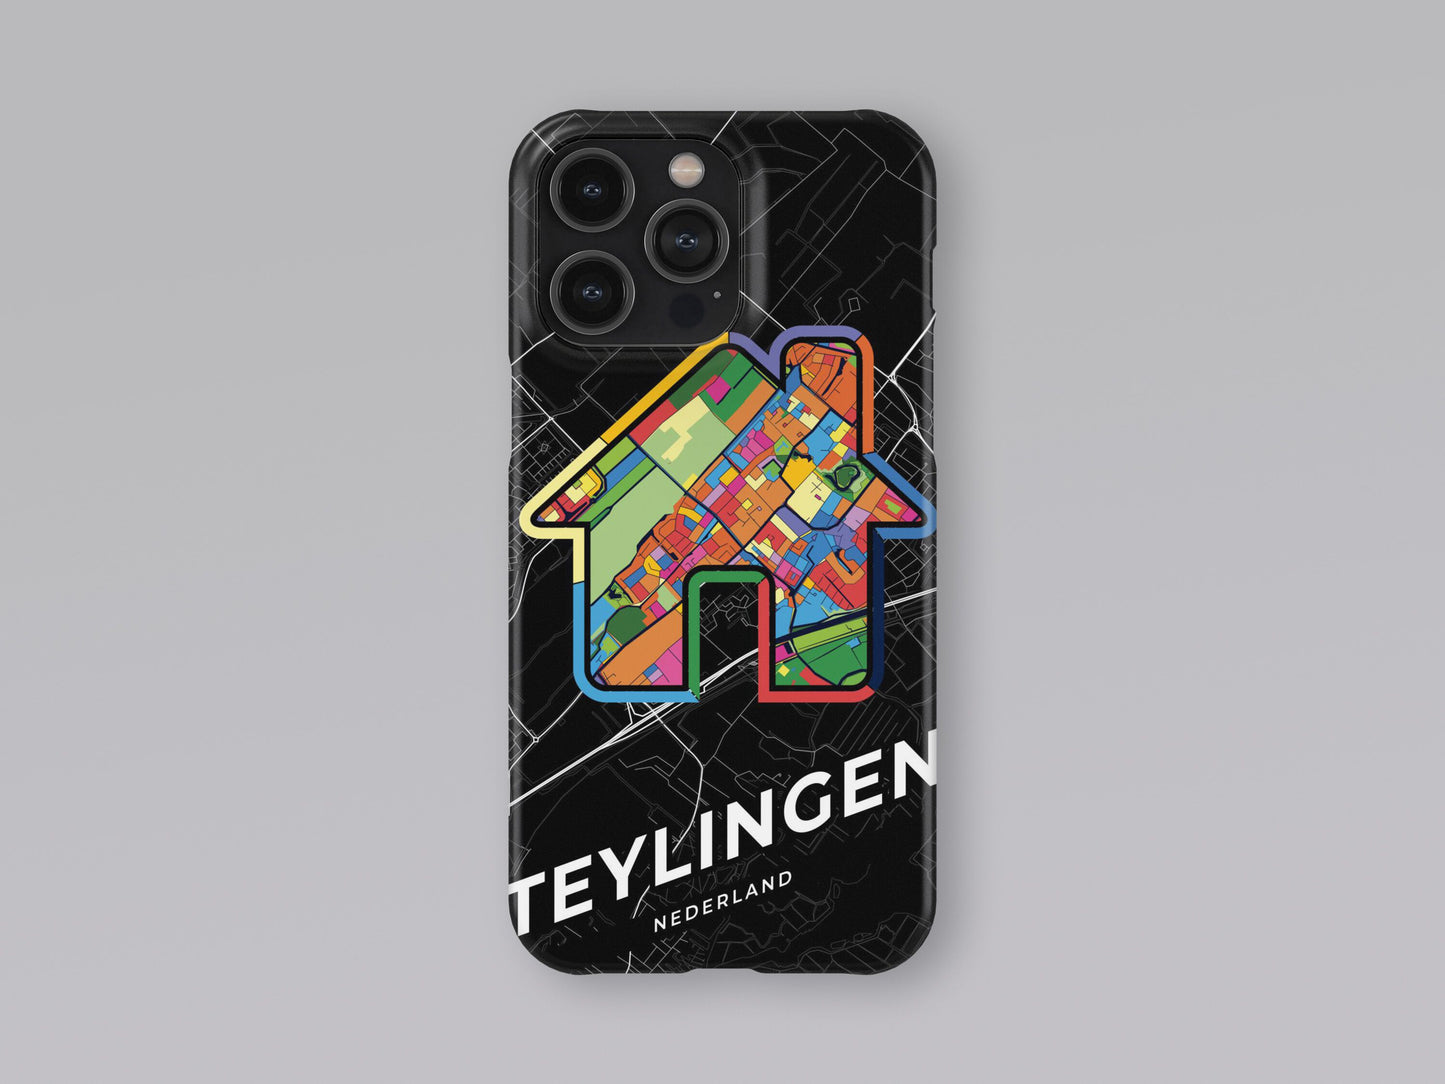 Teylingen Netherlands slim phone case with colorful icon 3